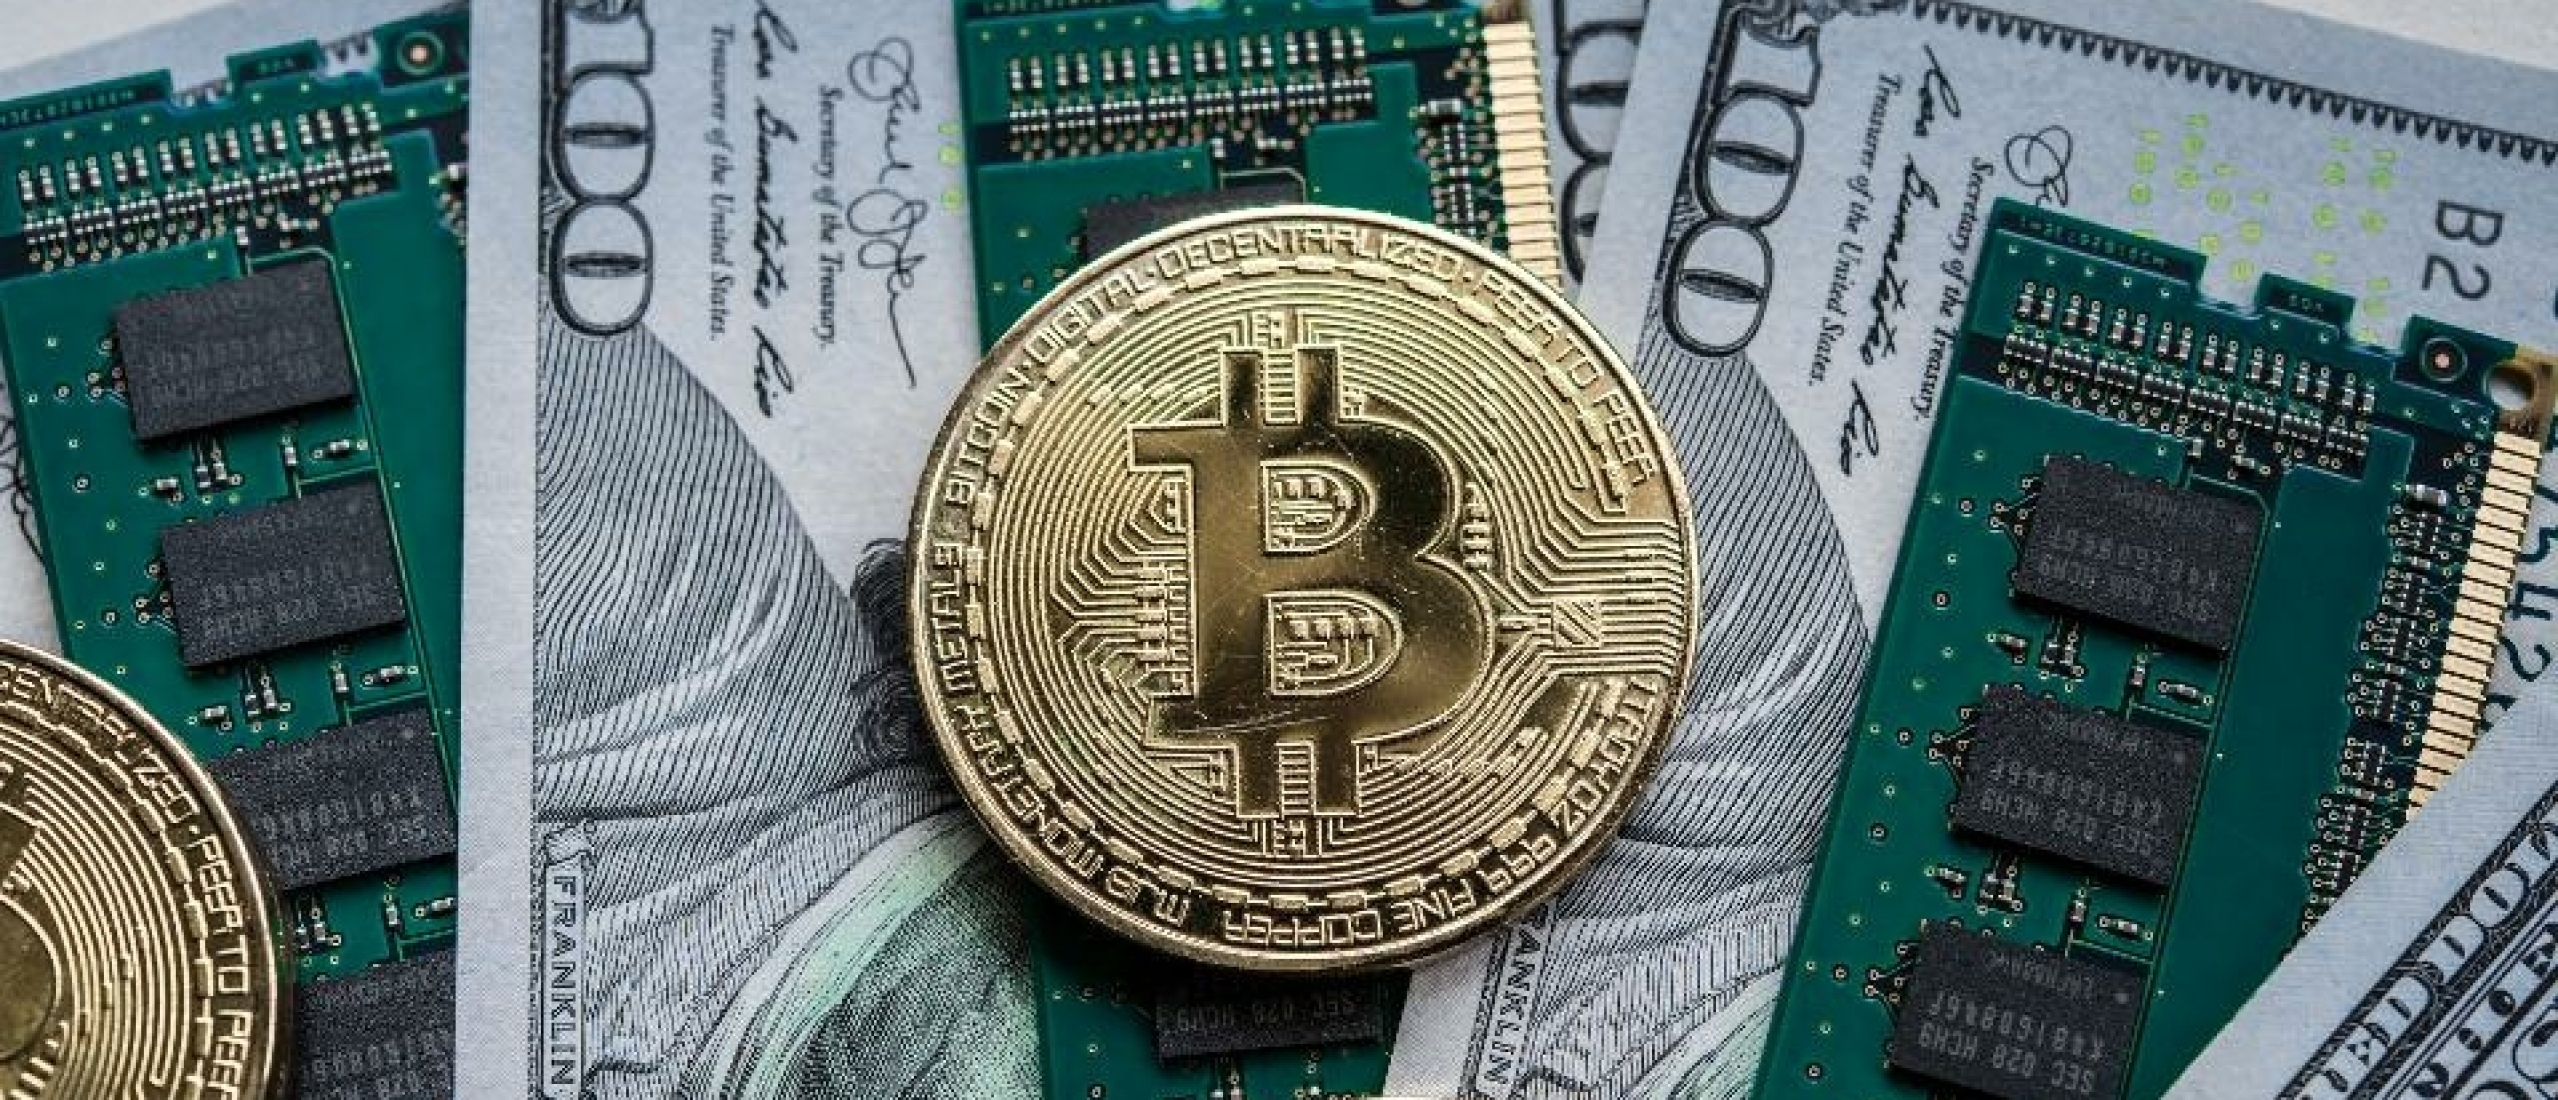 Bitcoin koers loopt op: halving nadert